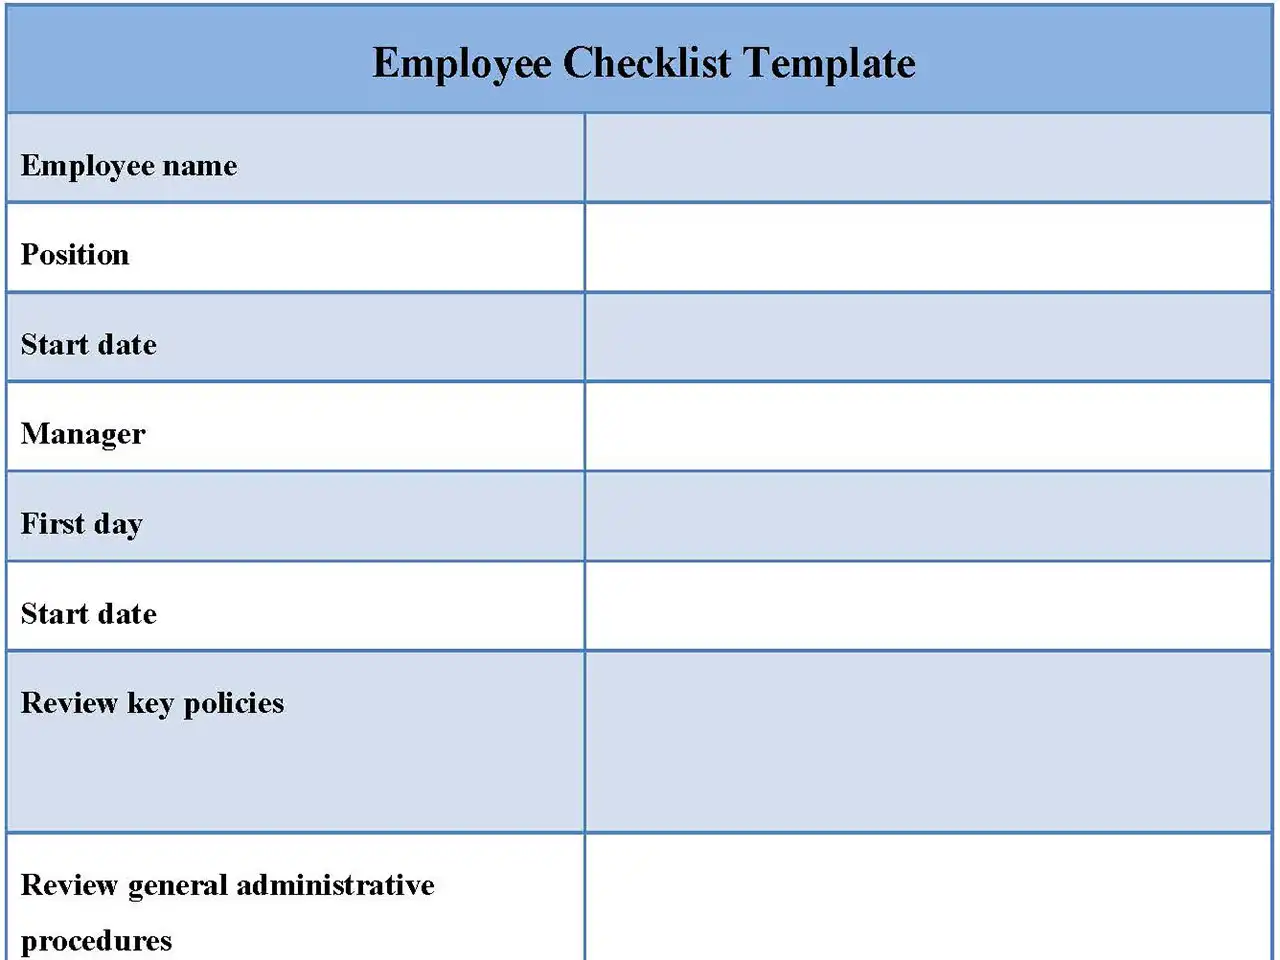 Employee checklist template